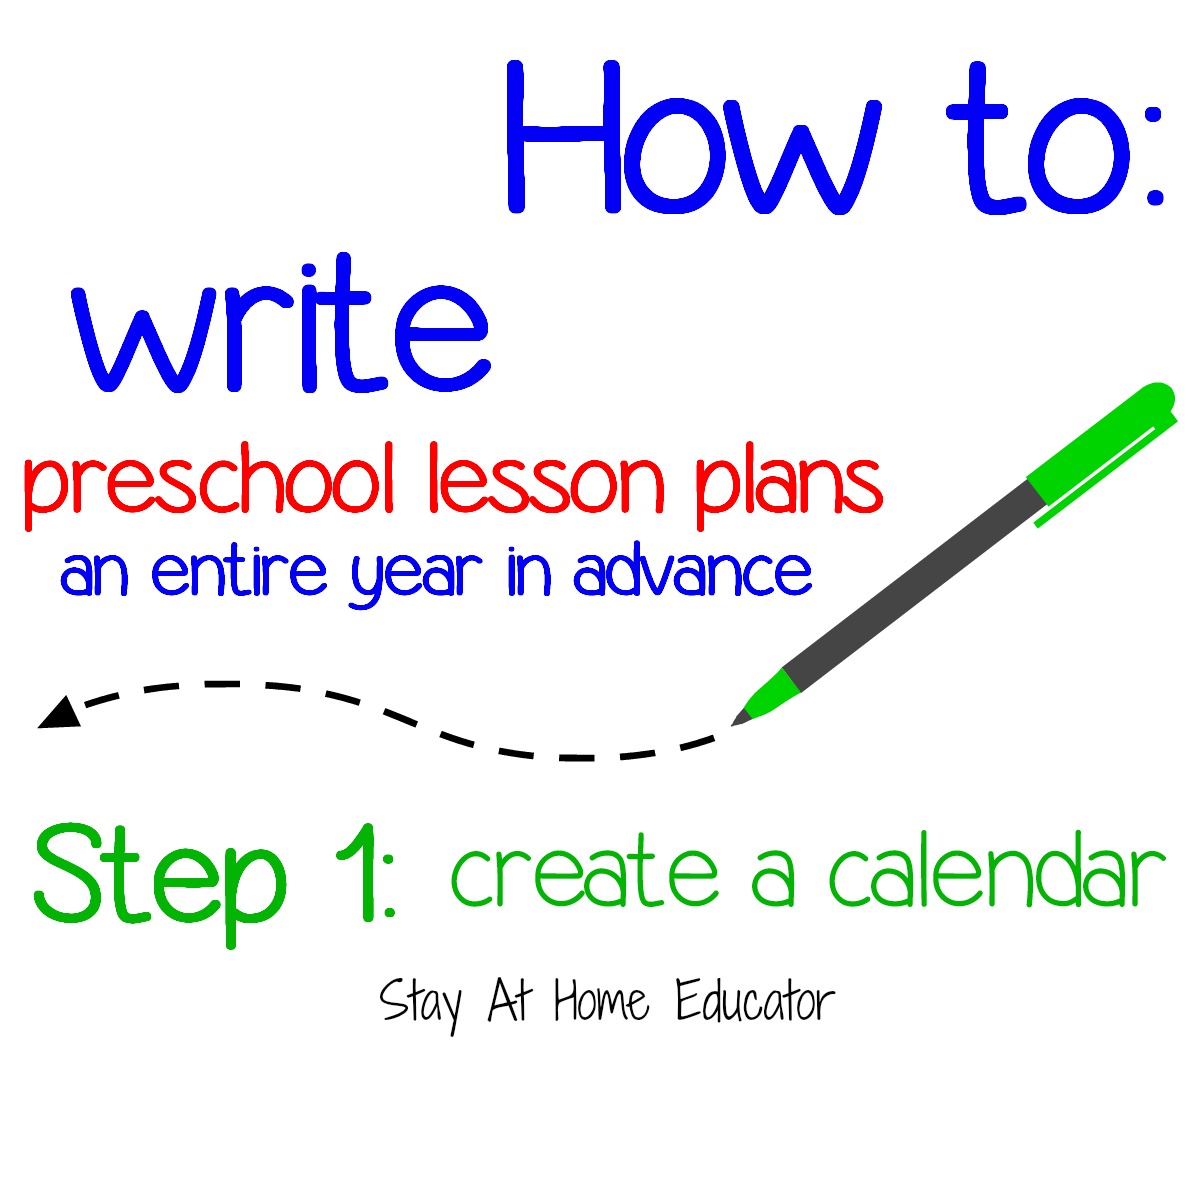 Image Of Cadar Lesson Plans For Preschool ImgHD